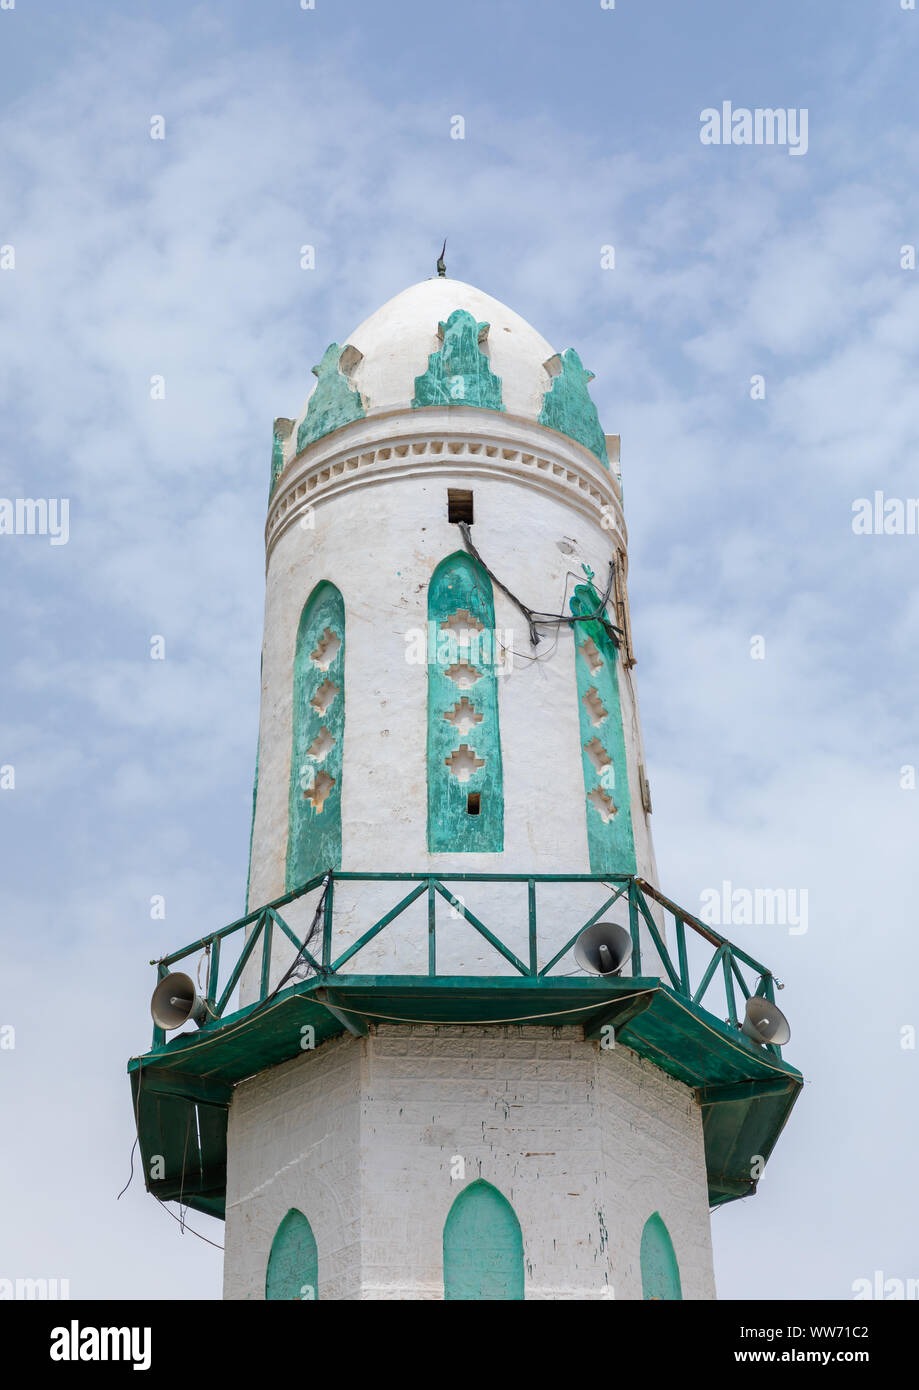 minaret-of-the-old-ottoman-mosque-sahil-region-berbera-somaliland-WW71C2.jpg